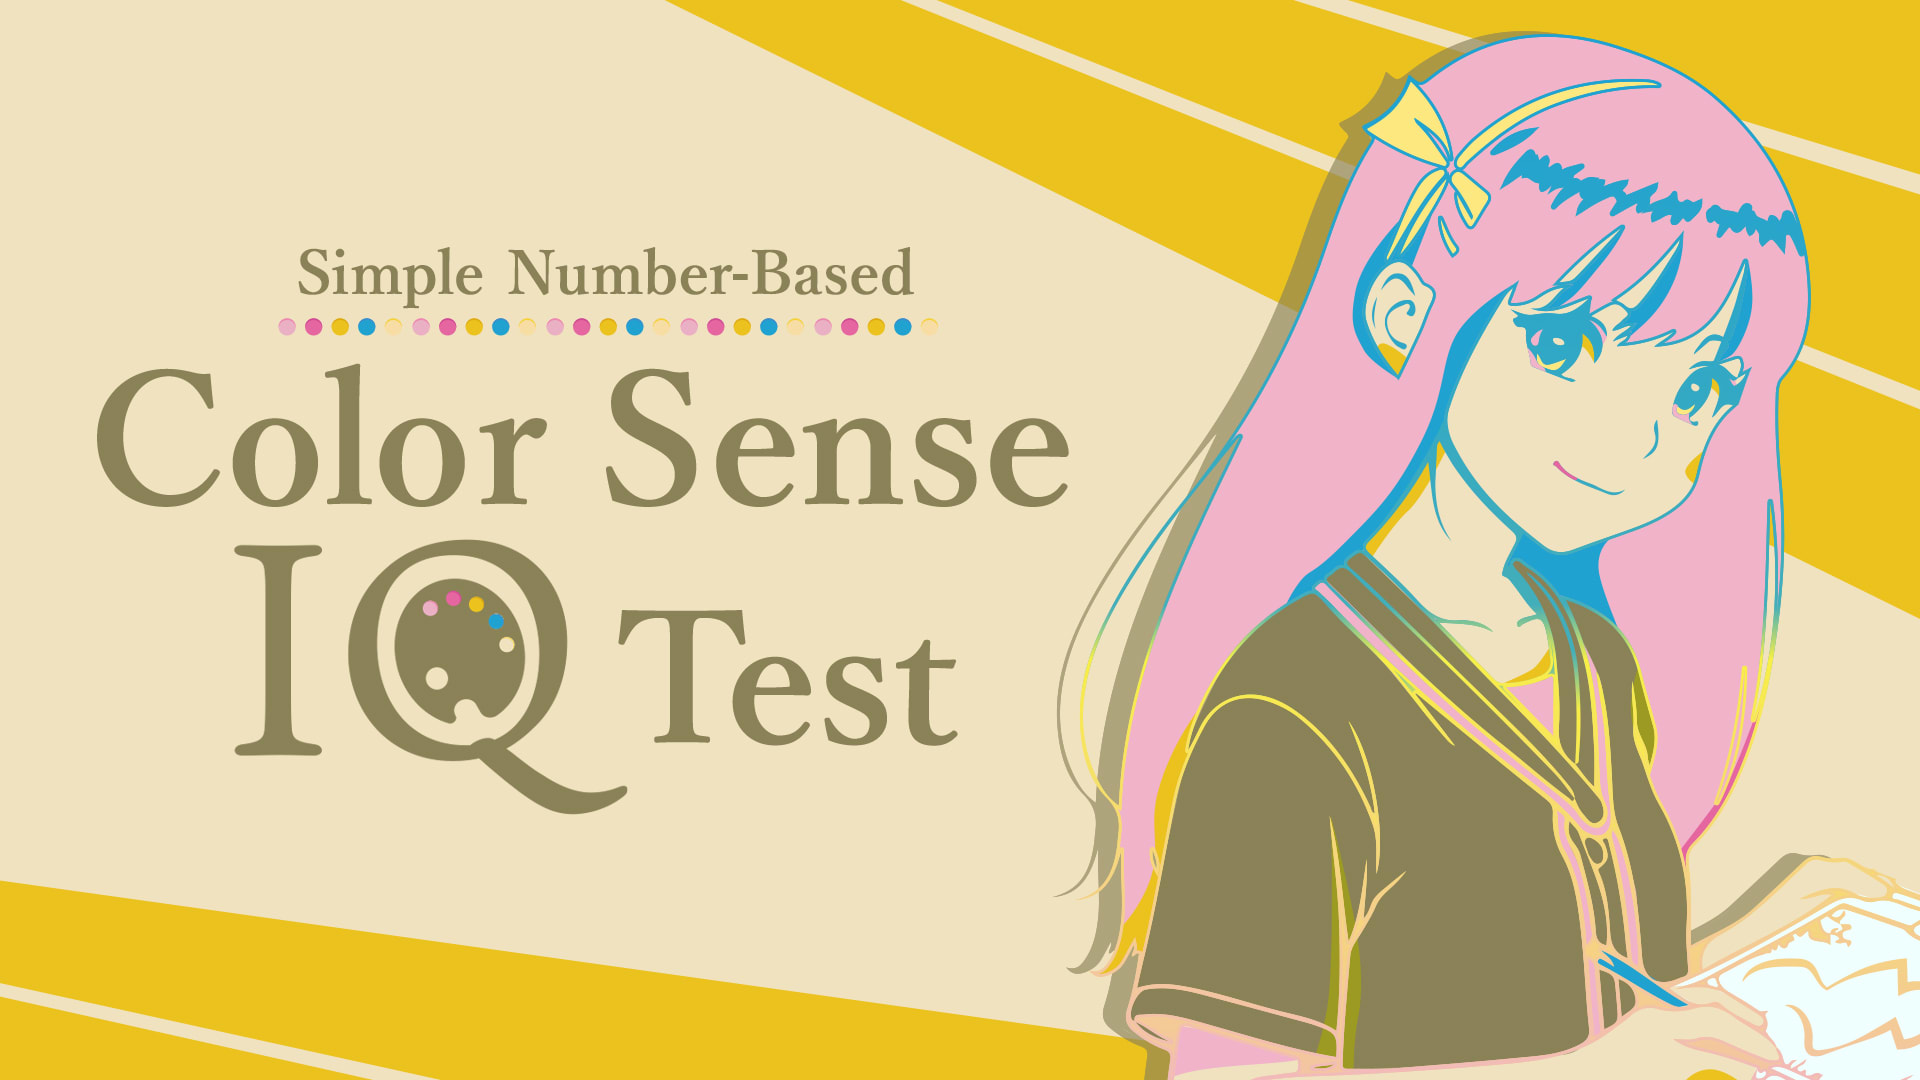 Simple Number-Based Color Sense IQ Test